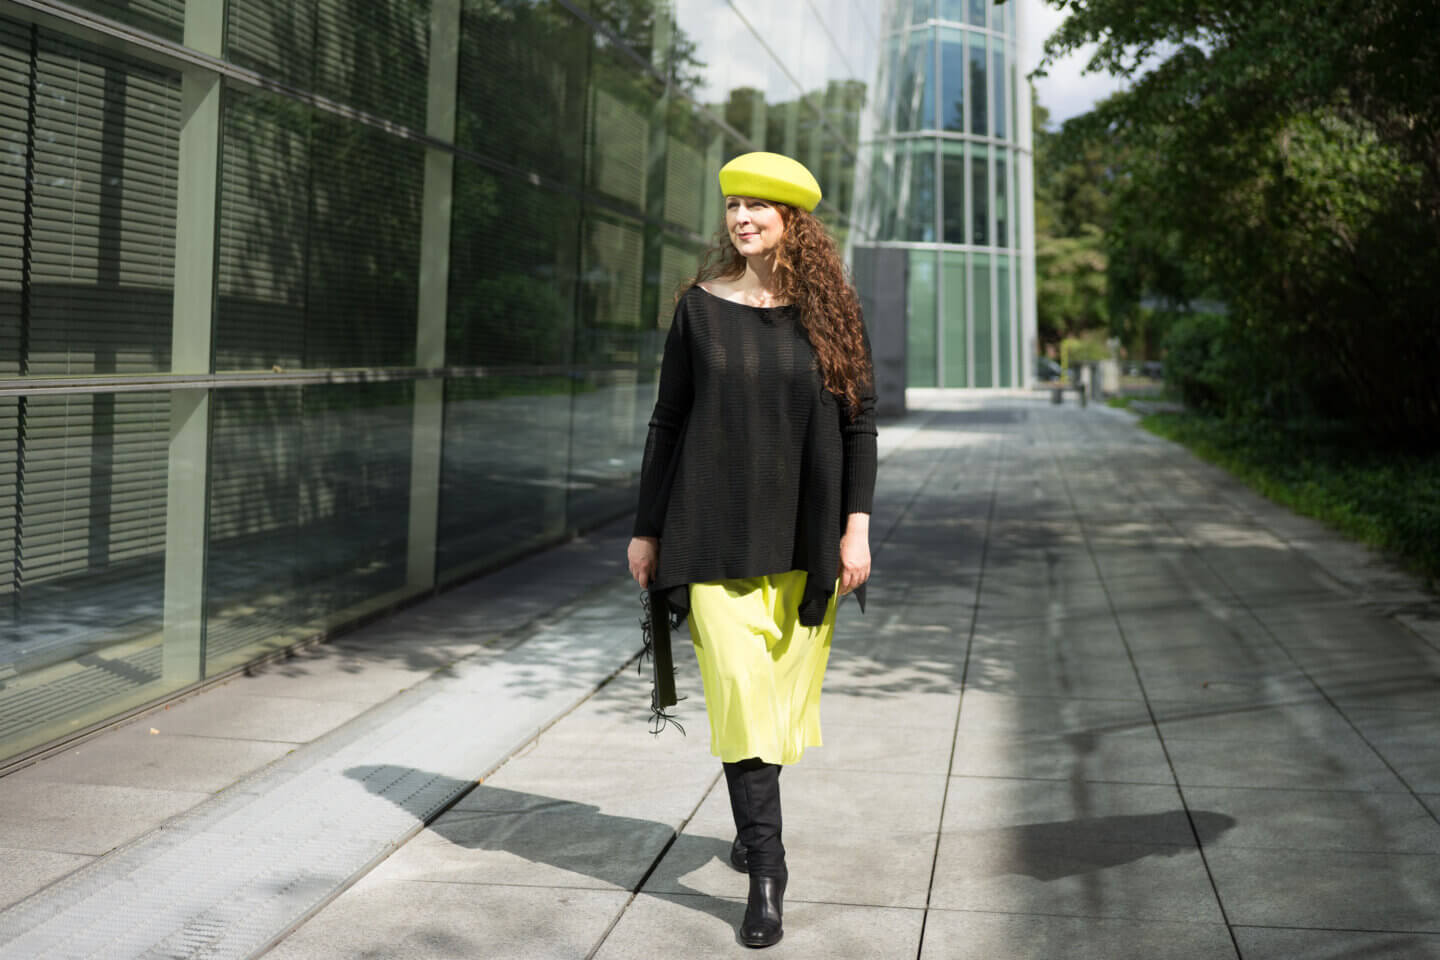 Neon Outfit, wie trägt man eigentlich neon, Neon kombinieren, Neon style - Ü50 Modebloggerin Ü40 Modeblog styleREBELLES